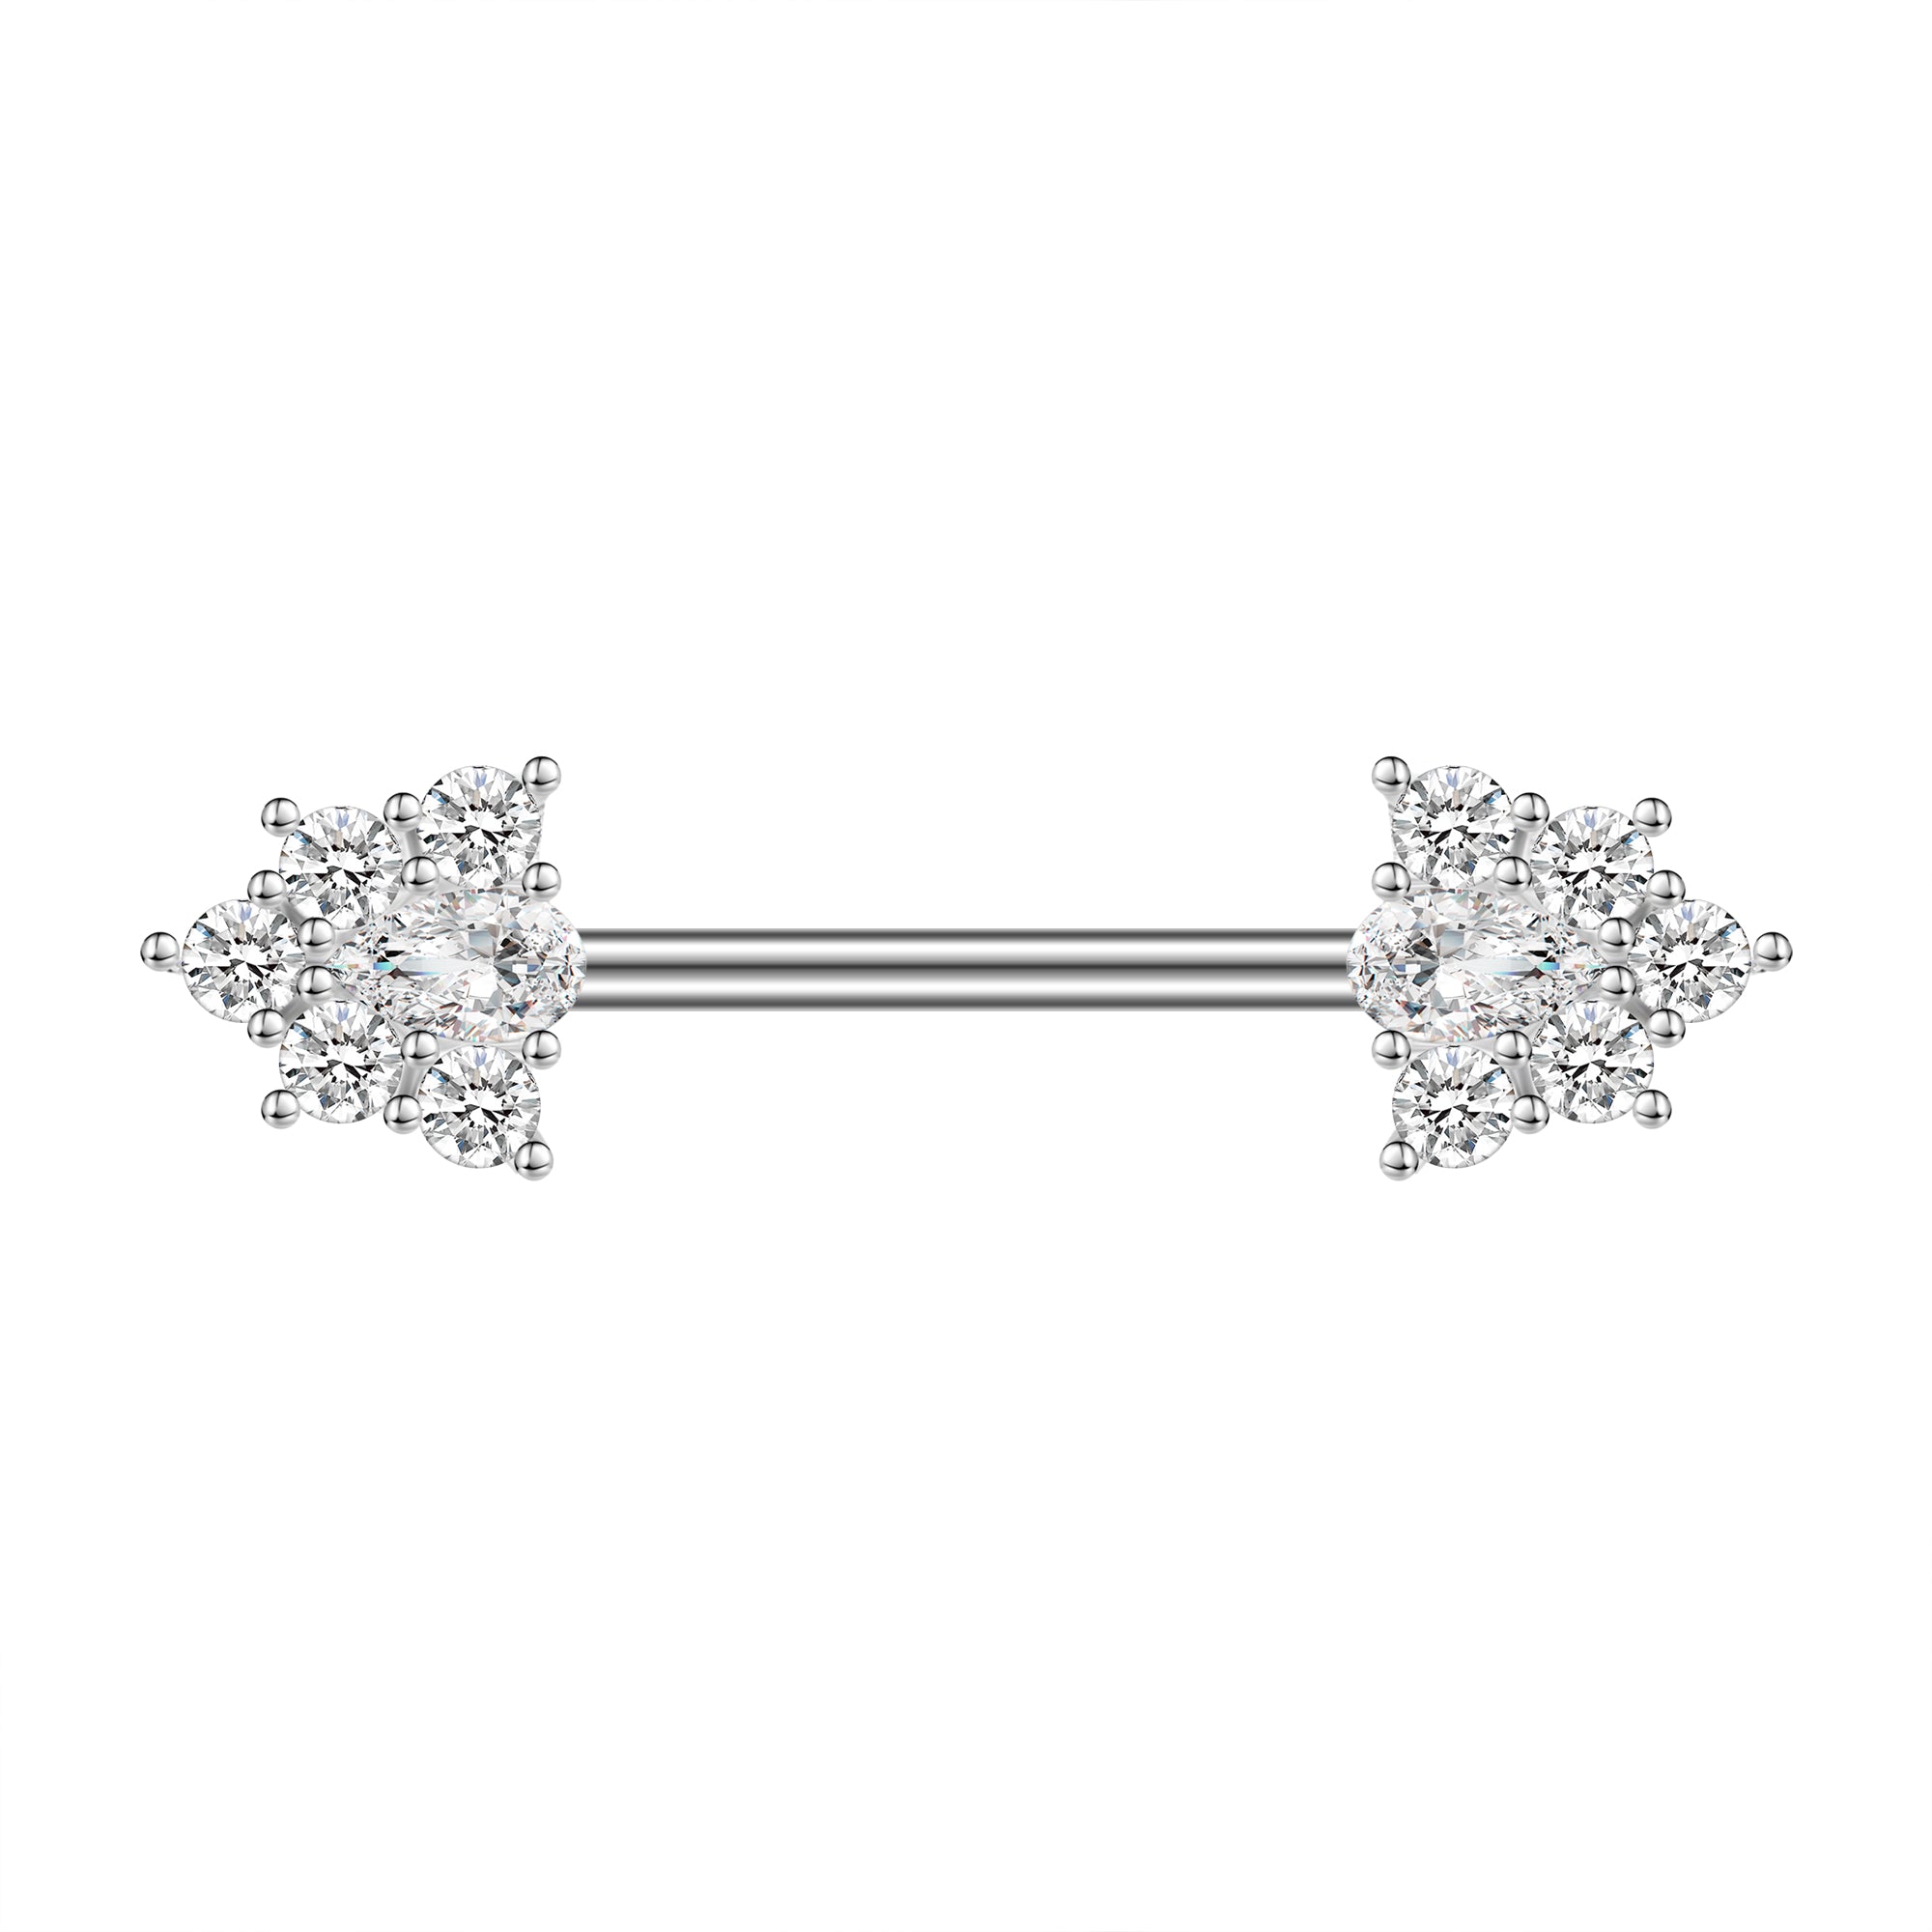 2Pcs 14G Spike Nipple Rings White Crystal Nipple Piercing Barbell Jewelry